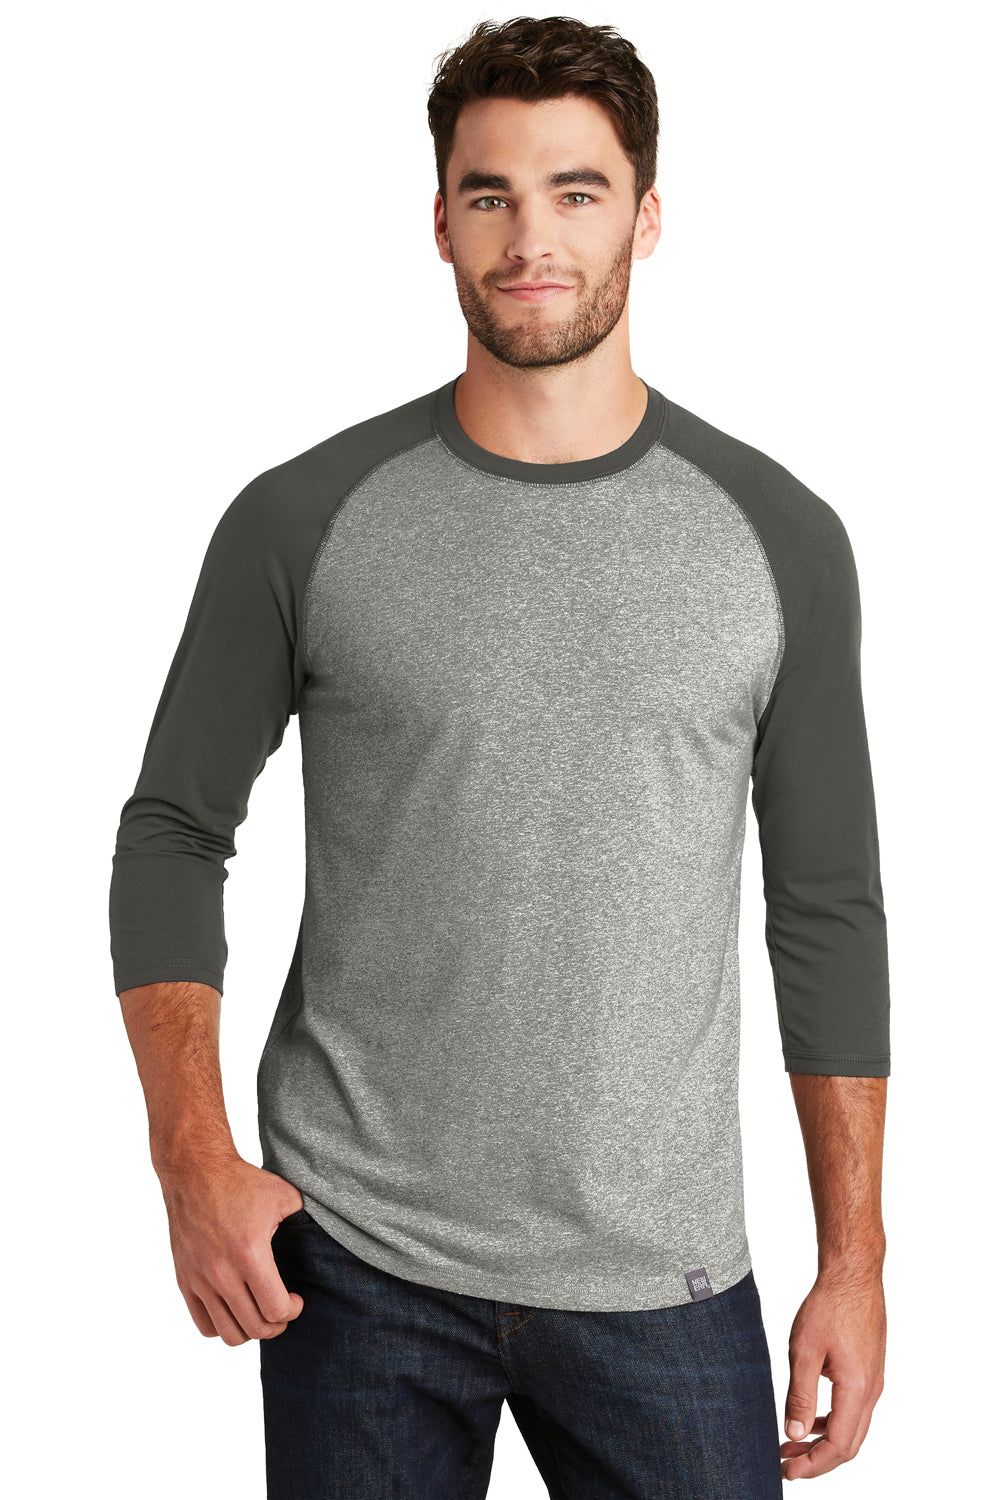 New Era NEA104 Mens Heritage 3/4 Sleeve Crewneck T-Shirt Graphite Grey/Light Graphite Grey Twist Front